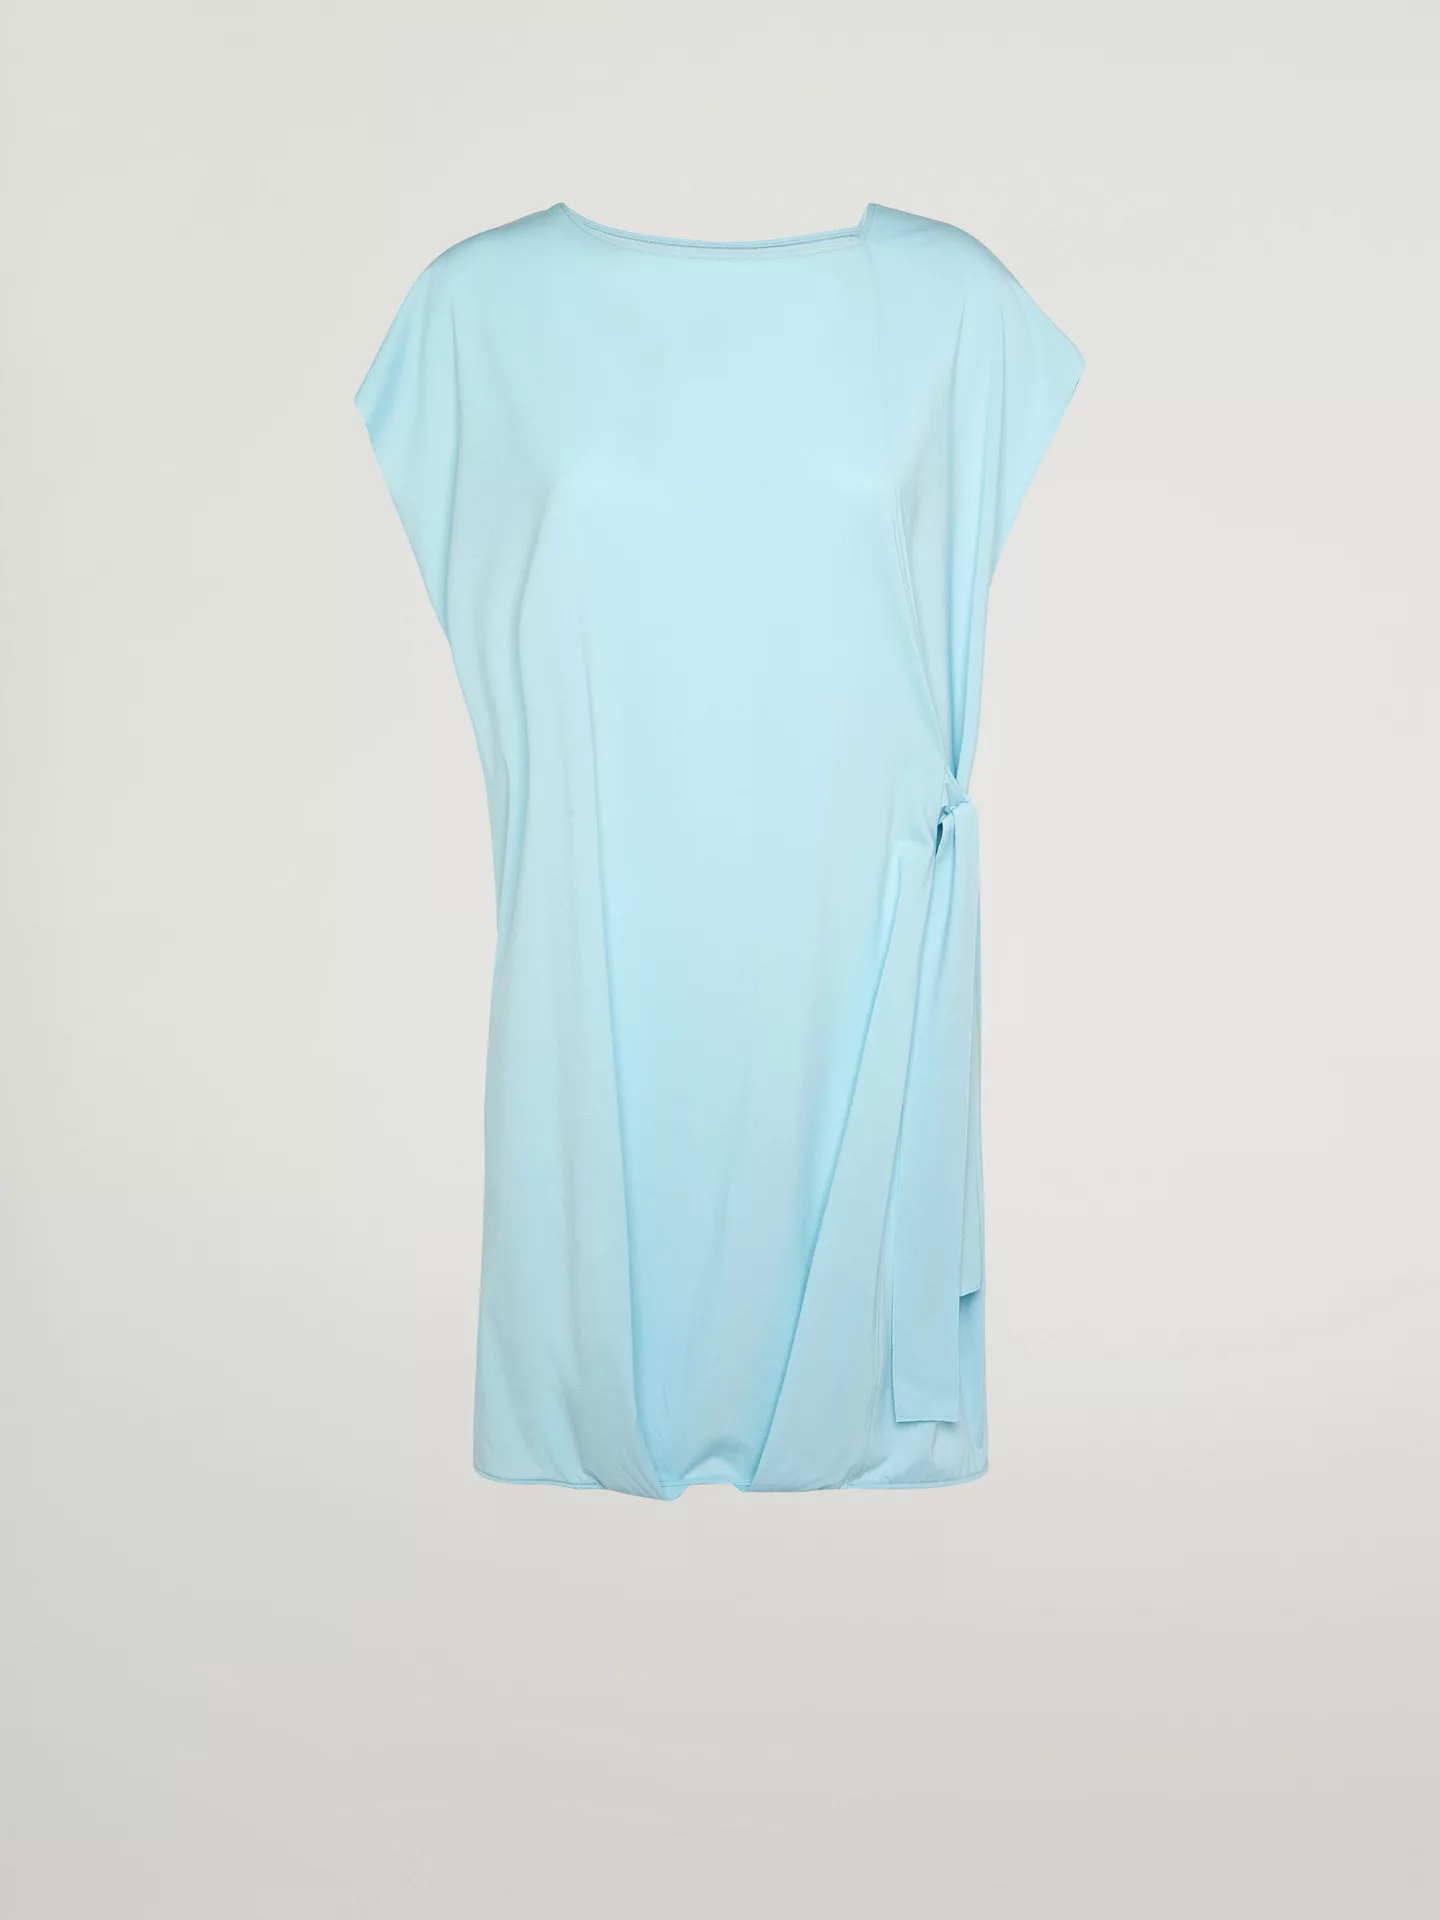 Wolford - Aurora Pure Cut Dress, Frau, ocean sky, Größe: M günstig online kaufen